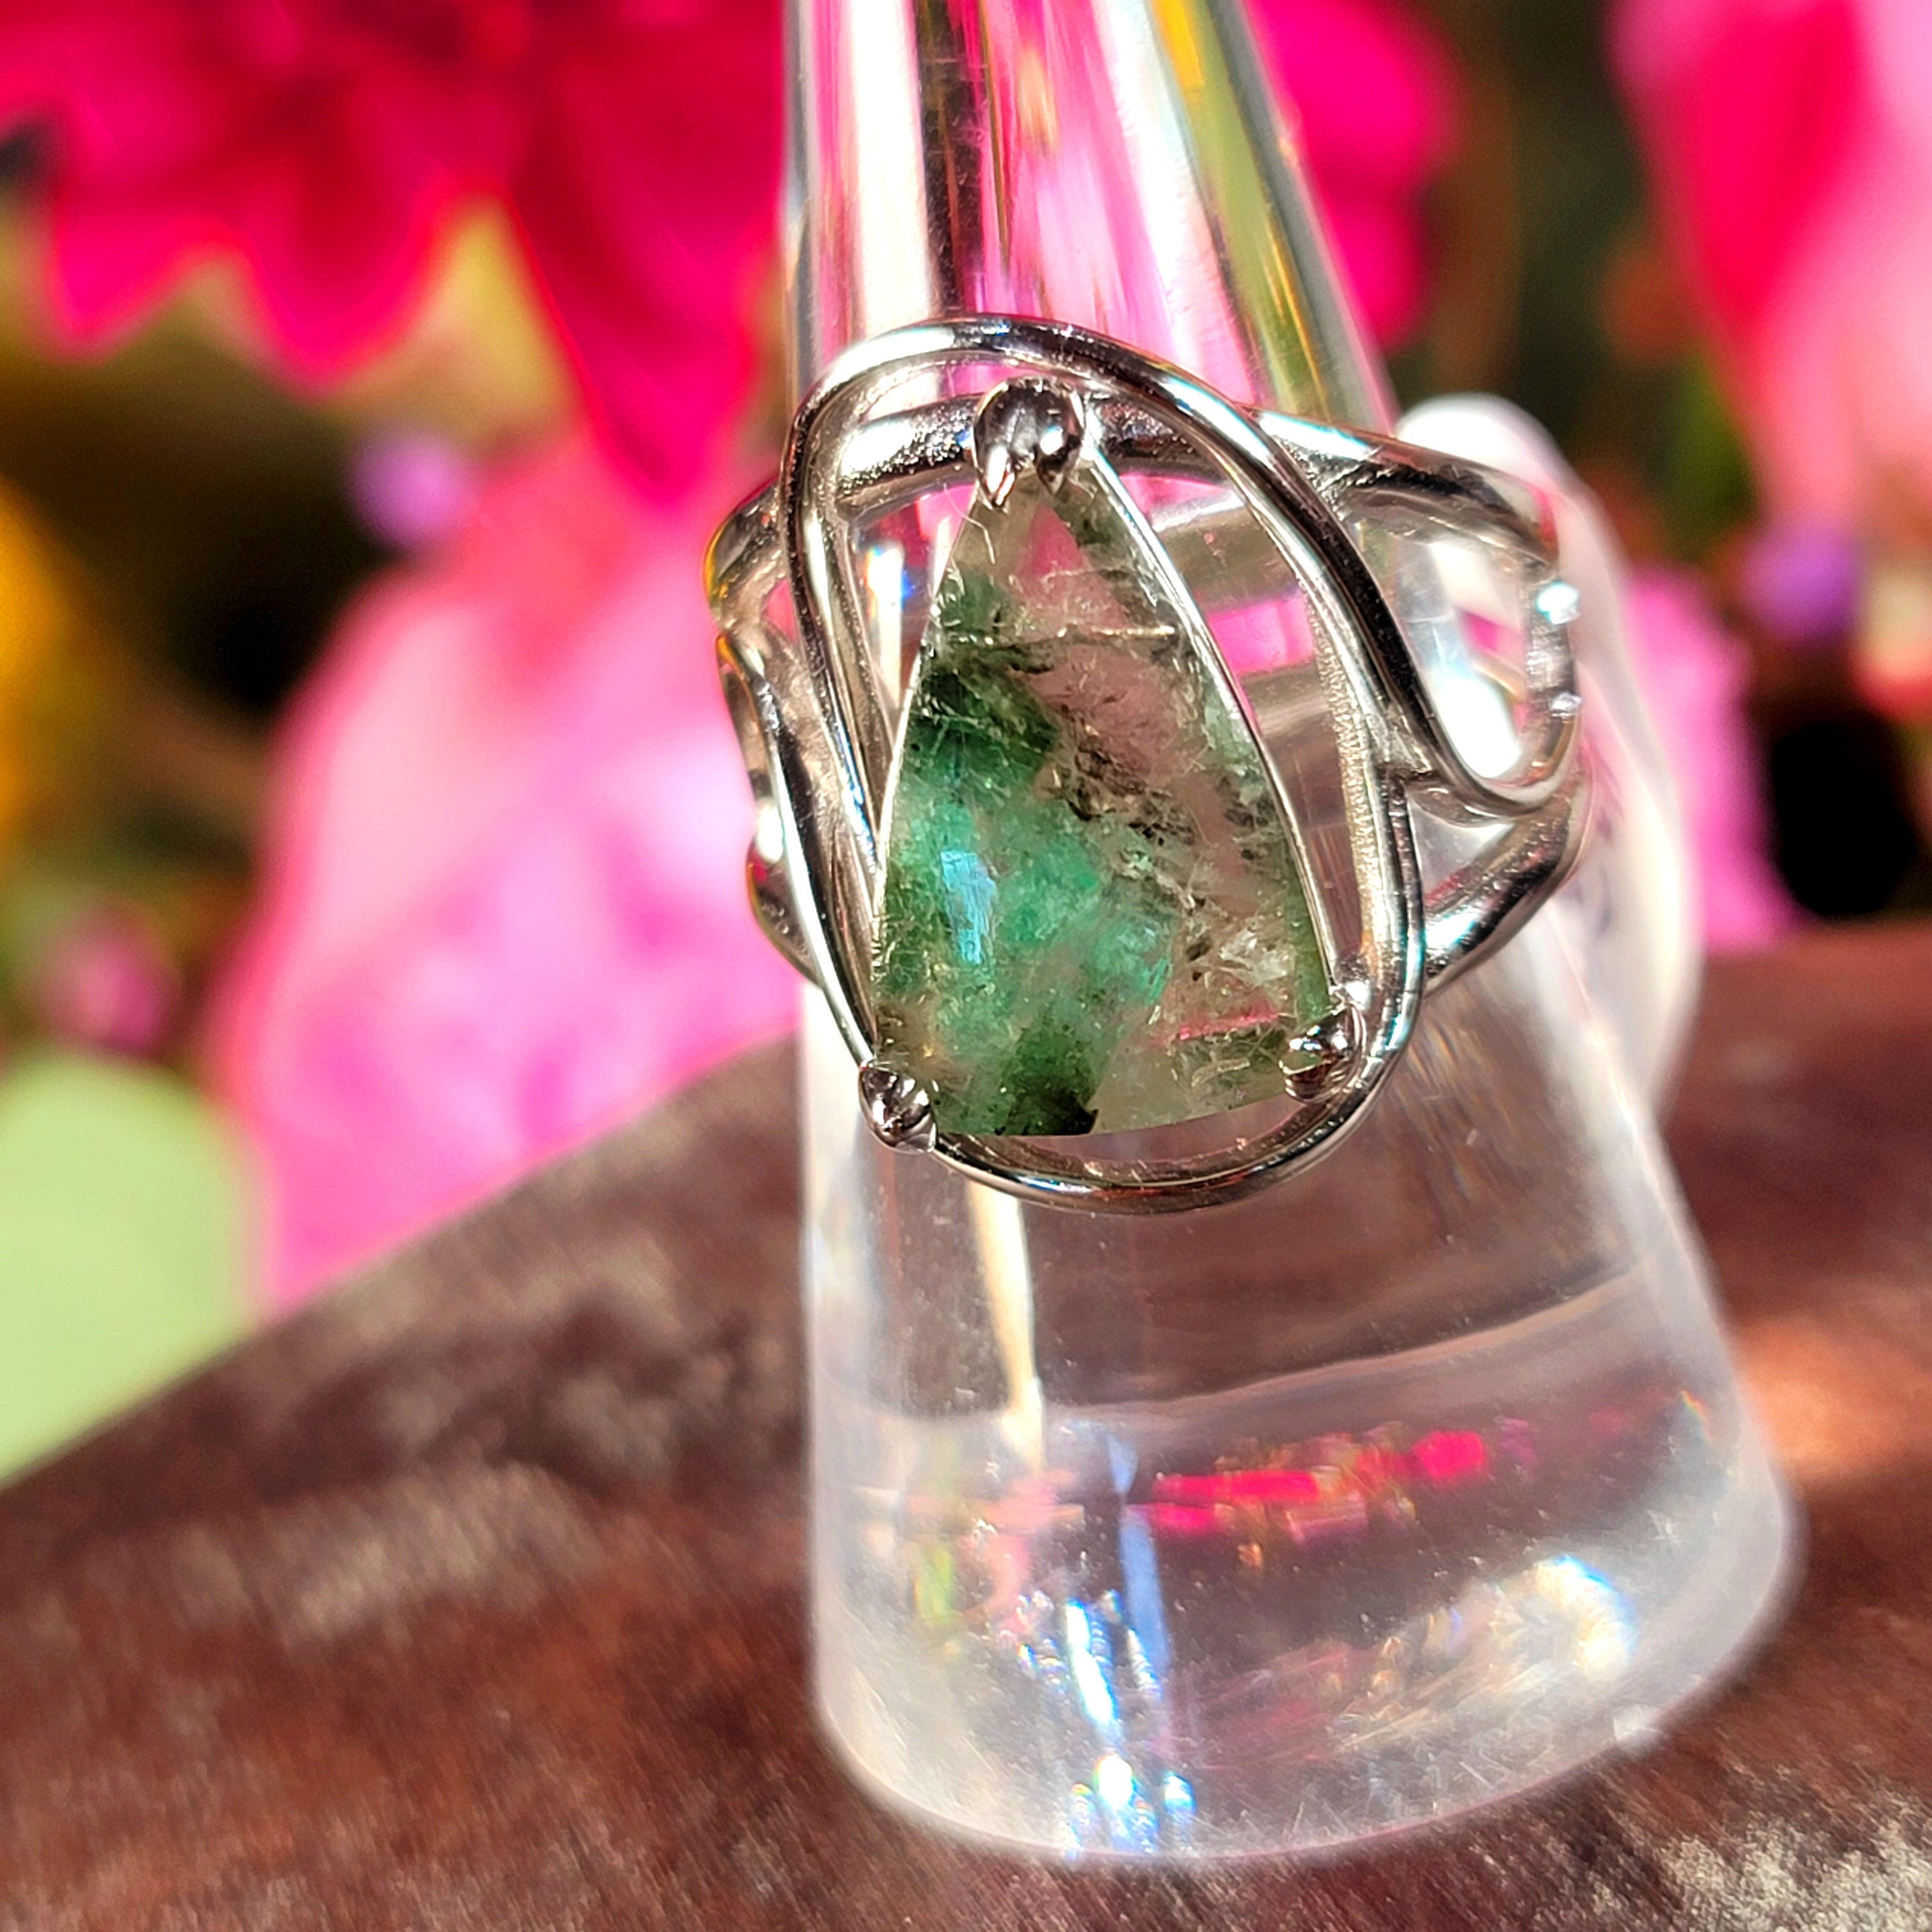 Emerald in Quartz Finger Cuff Adjustable Ring .925 Silver for Abundance, Love and Wealth